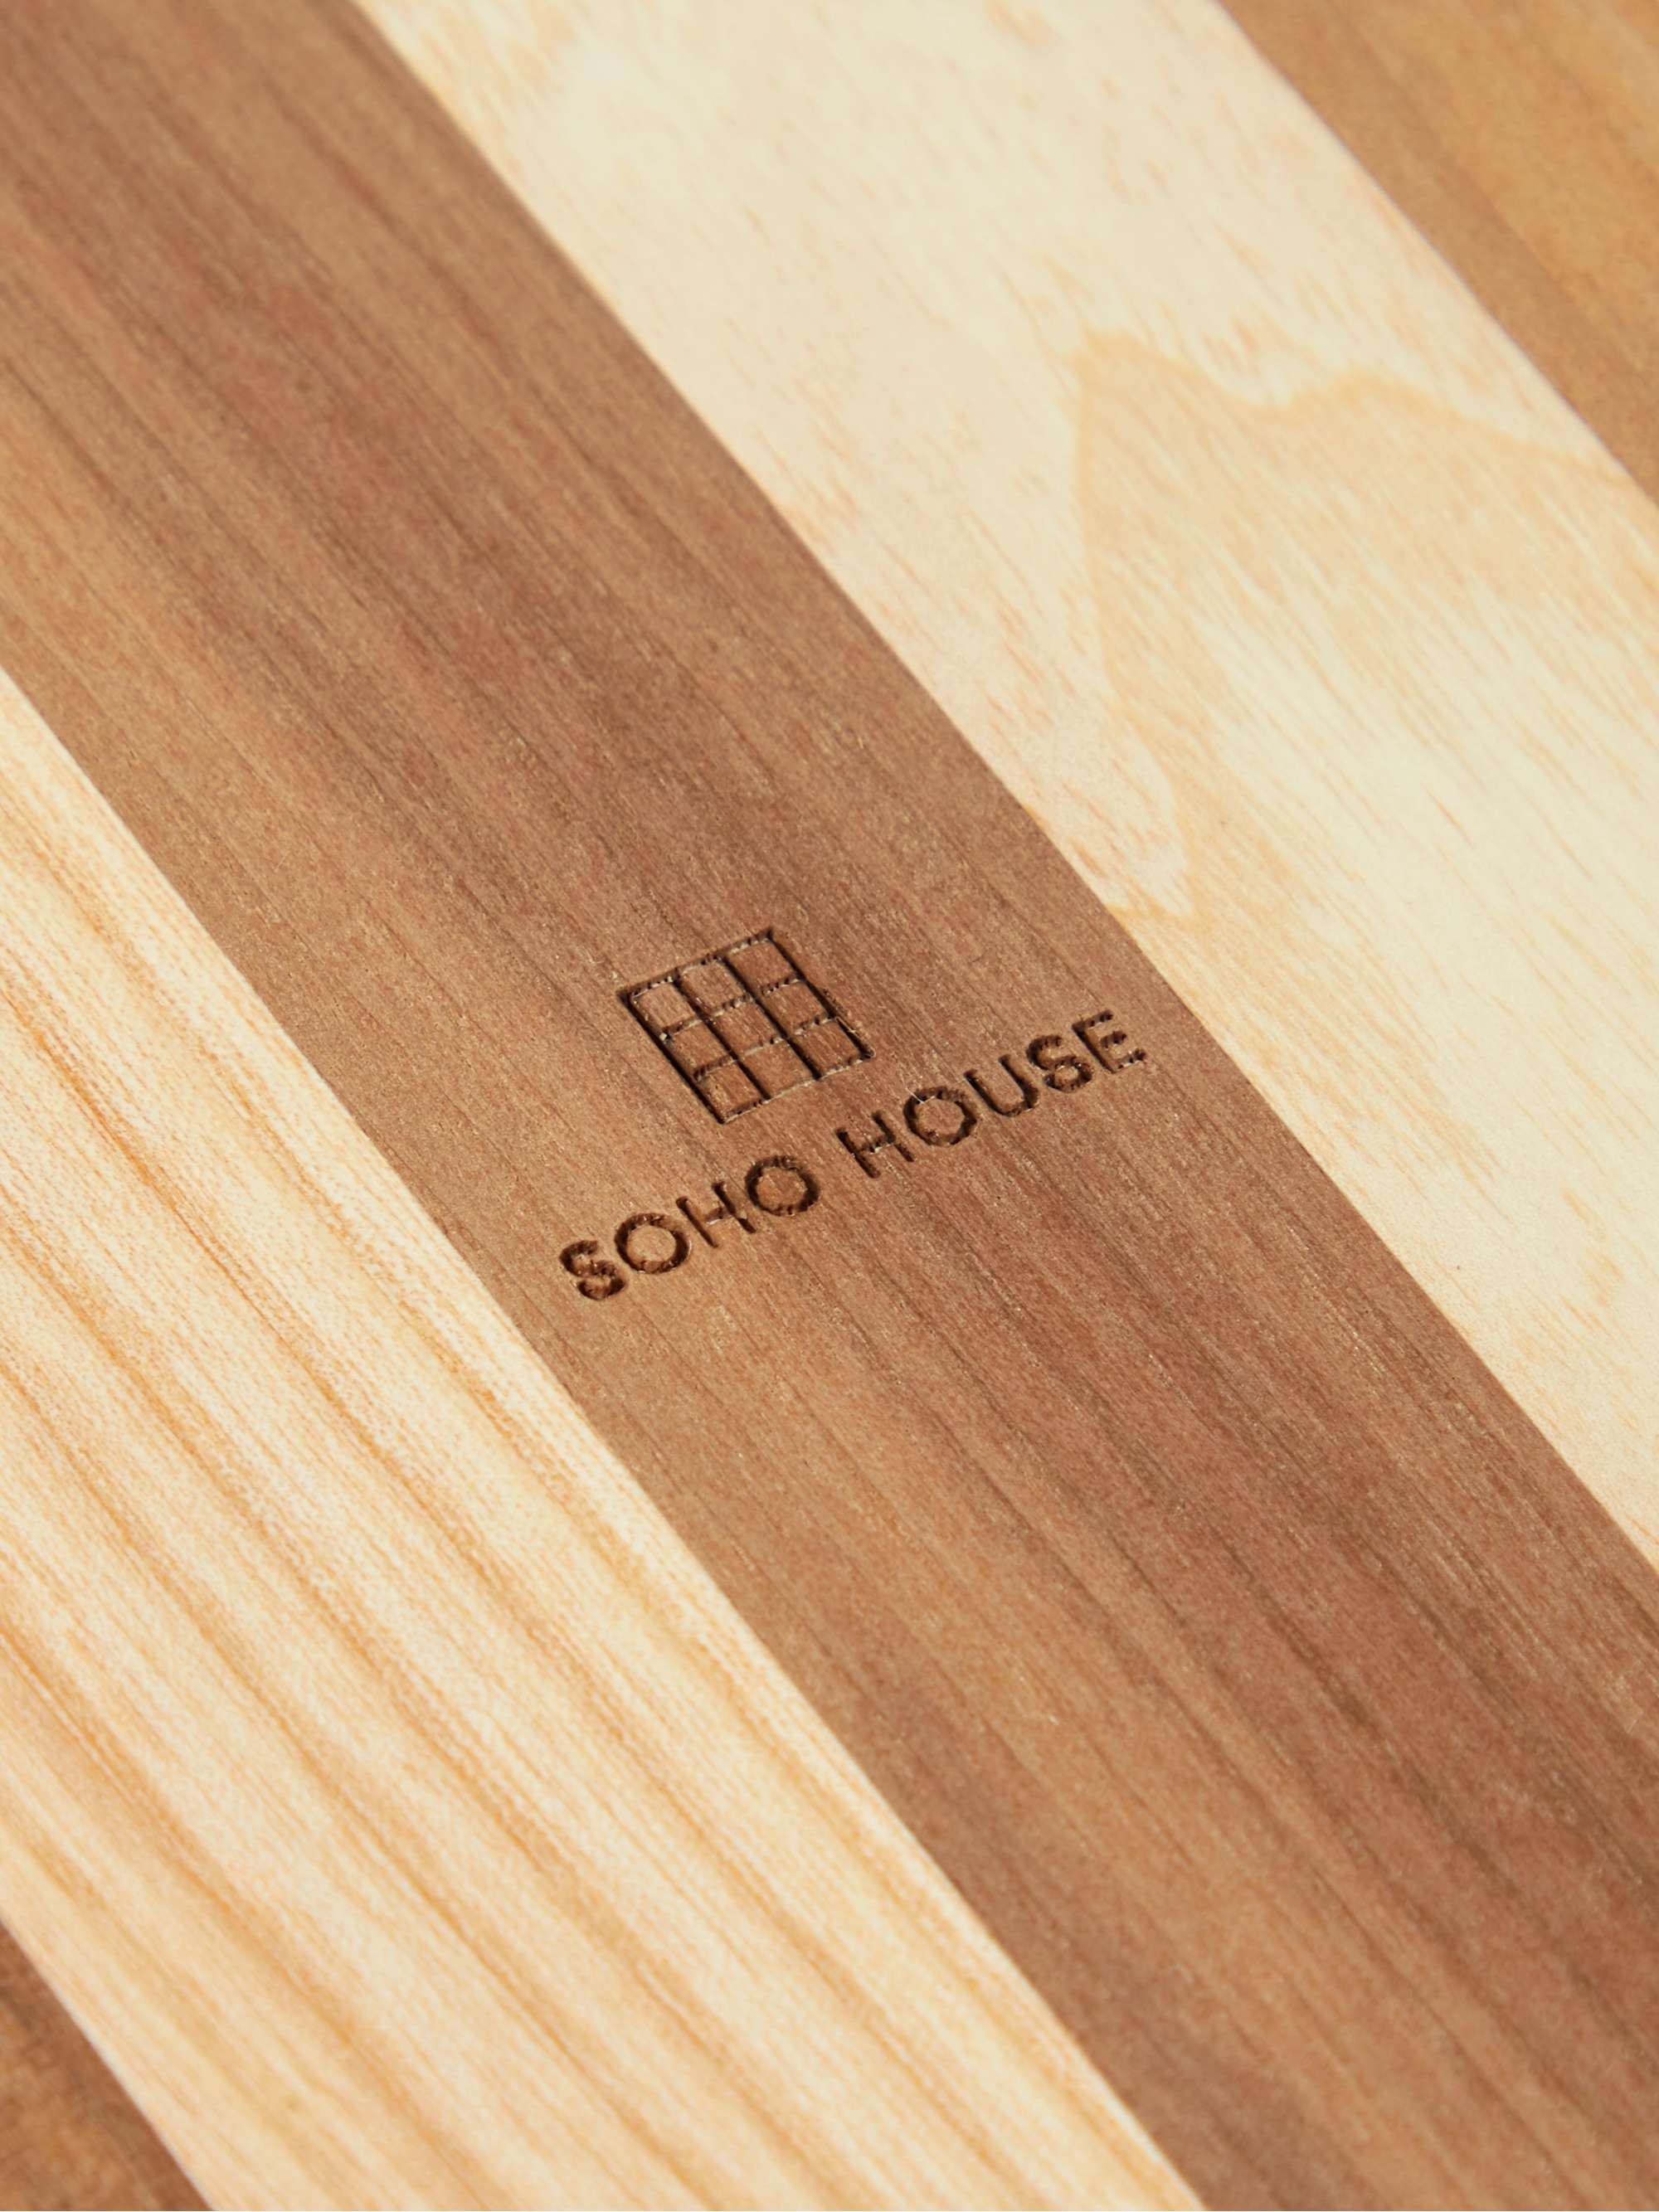 Soho Home Ember Contrast Circular Chopping Board